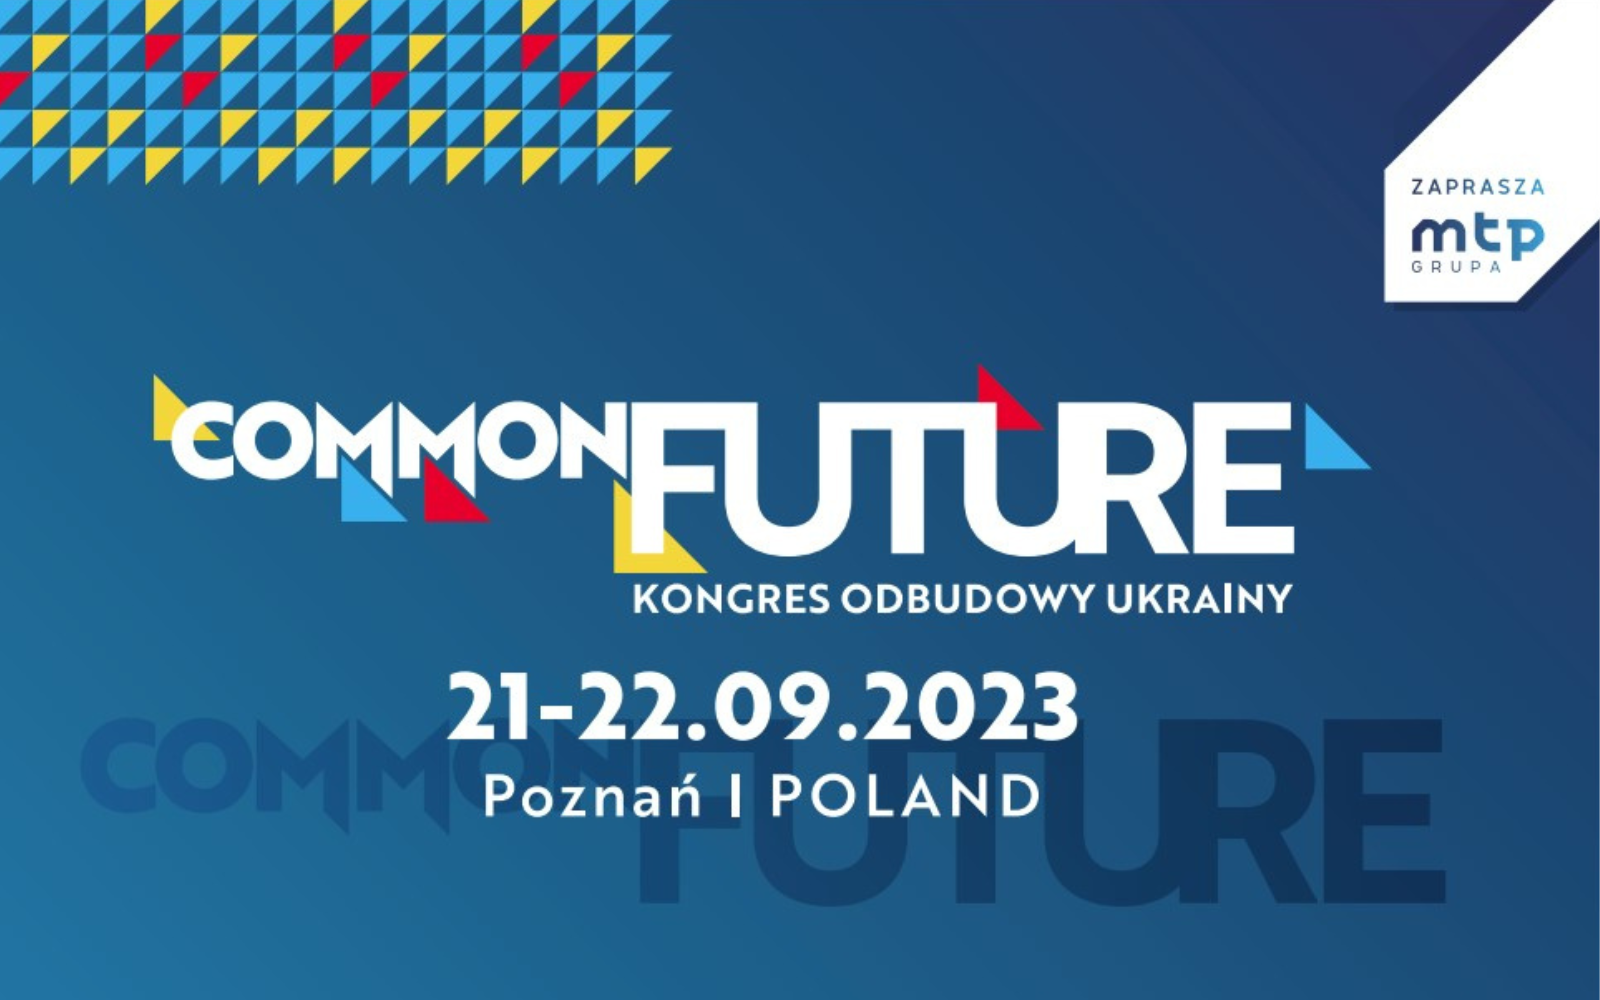 Kongres Odbudowy Ukrainy COMMON FUTURE